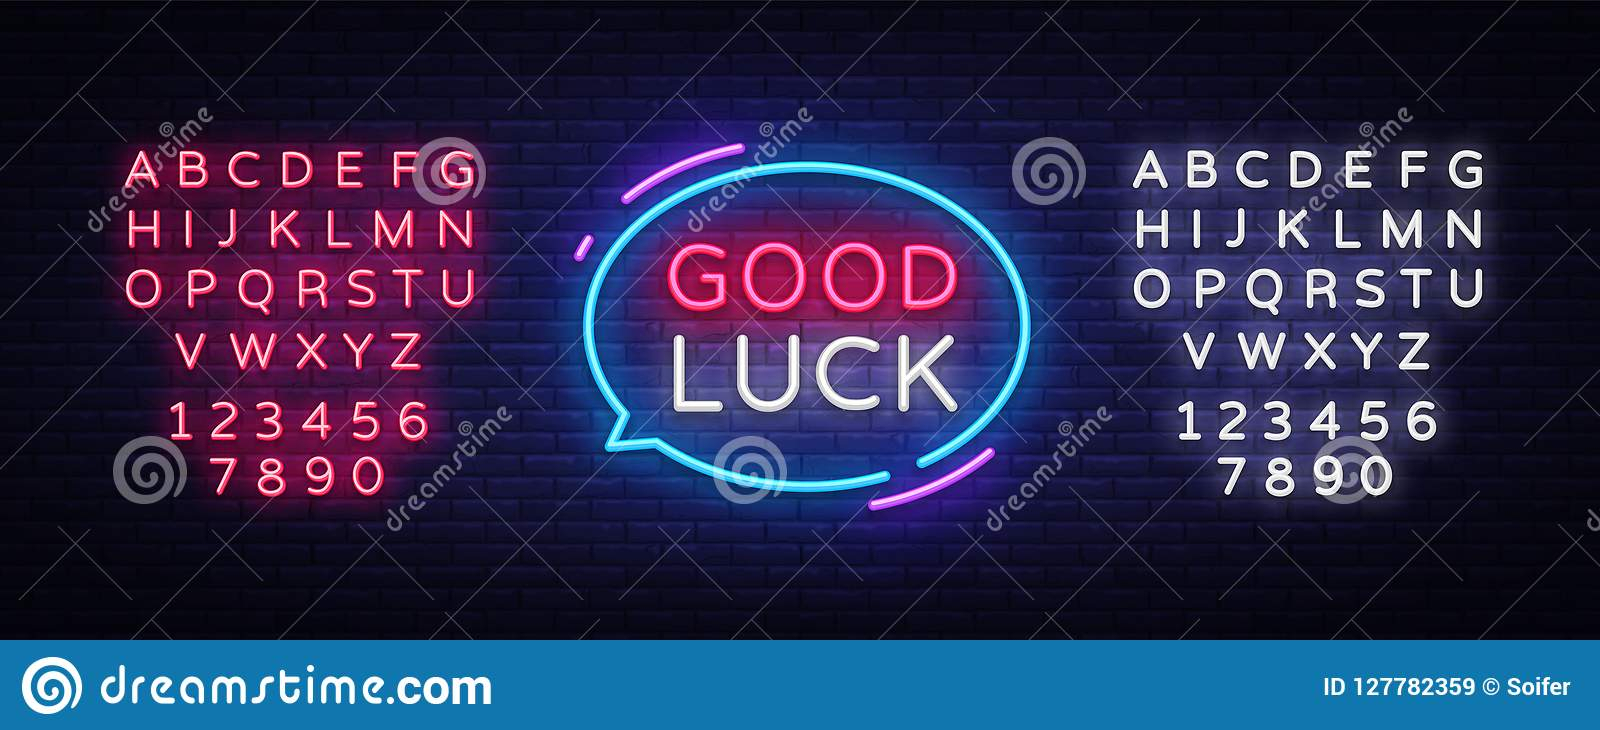 Good Luck Neon Text Vector. Good Luck Neon Sign, Design With Regard To Good Luck Banner Template